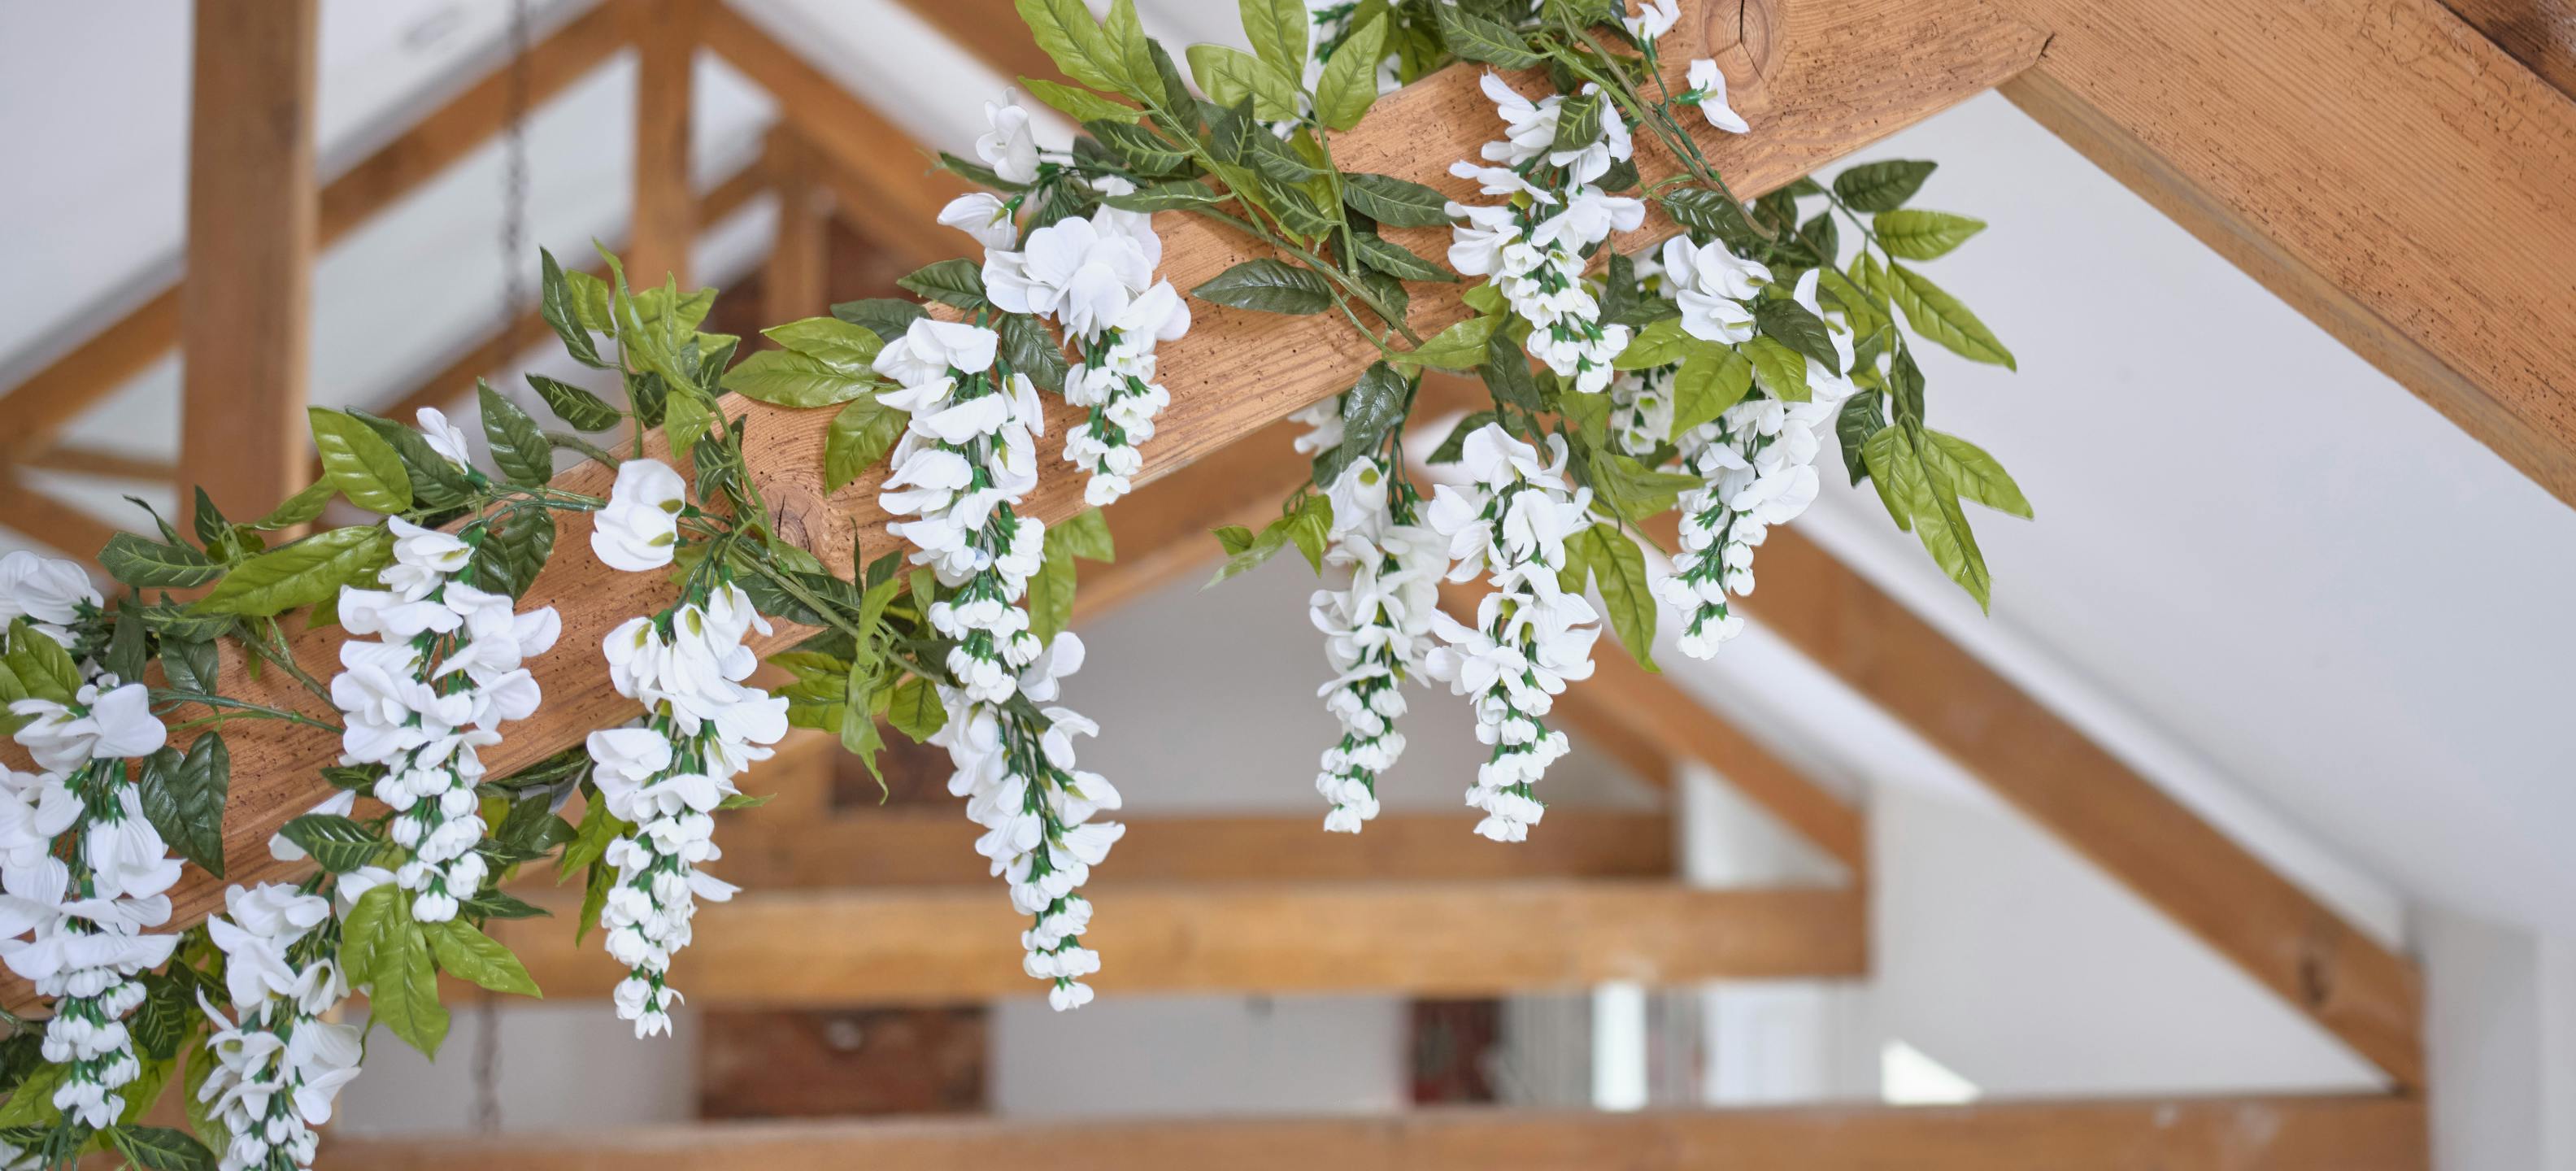 White artificial wisteria garland on oak beam